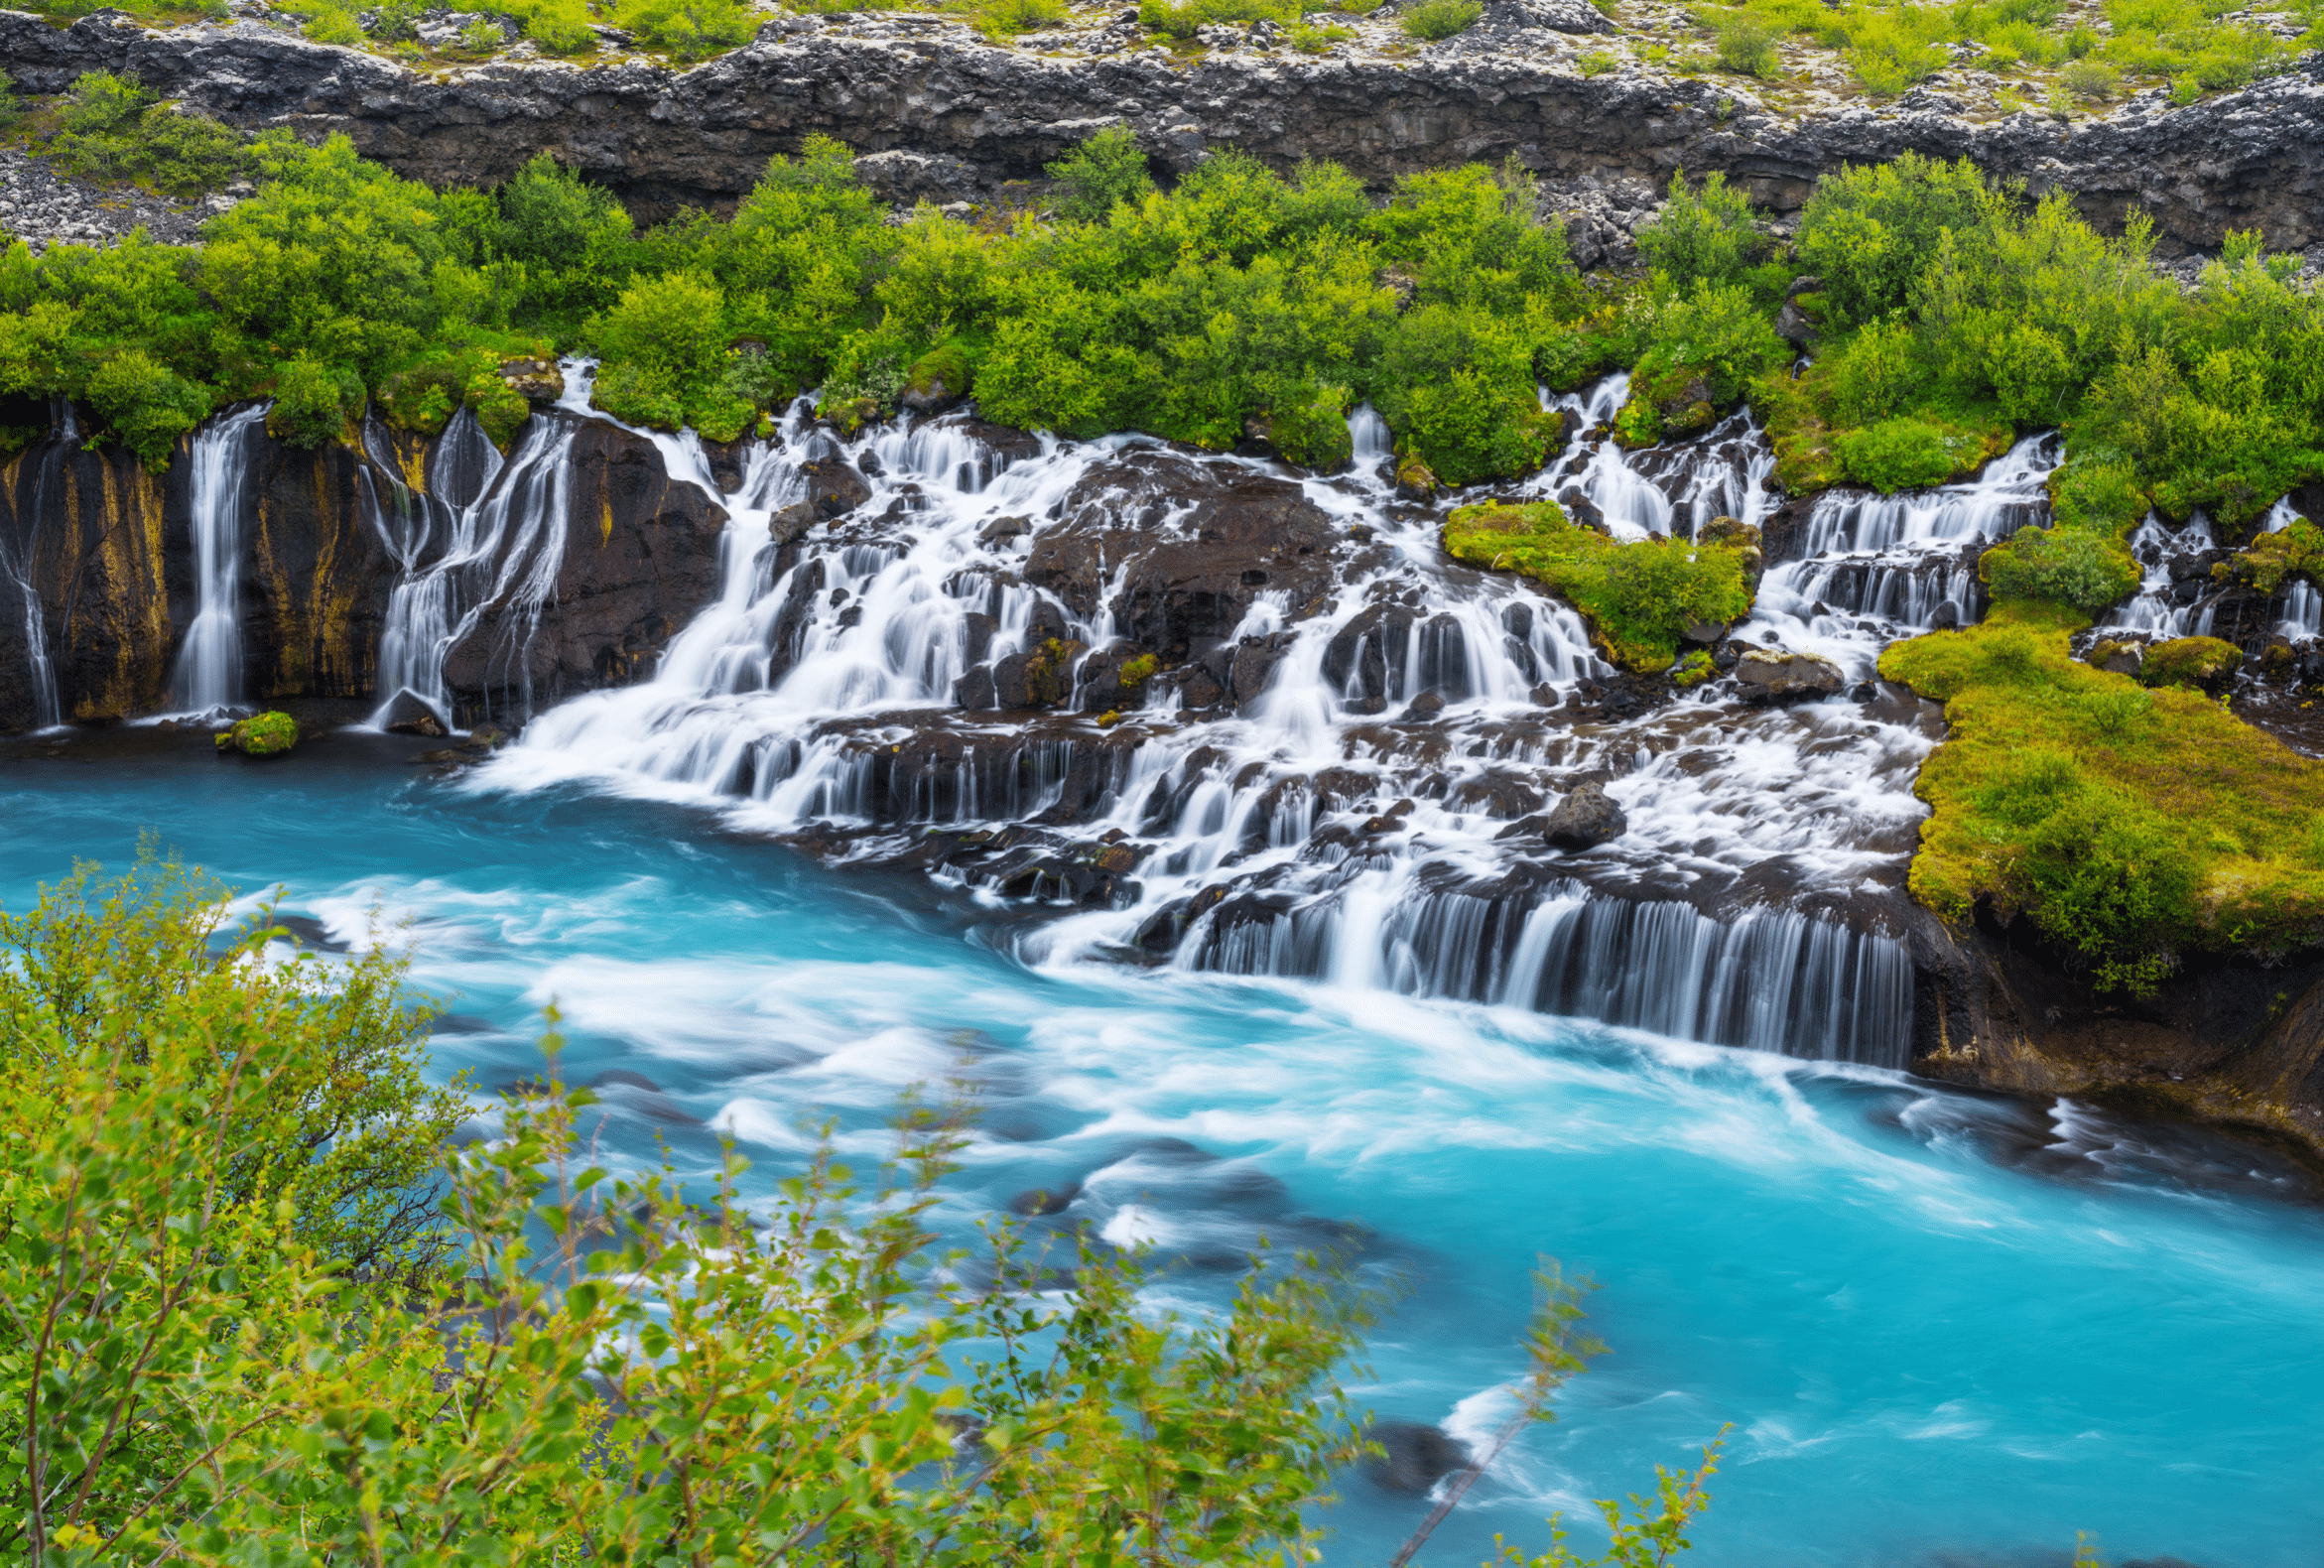 Agua que fluye por un campo de lava hacia un río en las cascadas de Hraunfossar en el oeste de Islandia, rodeada de vegetación.